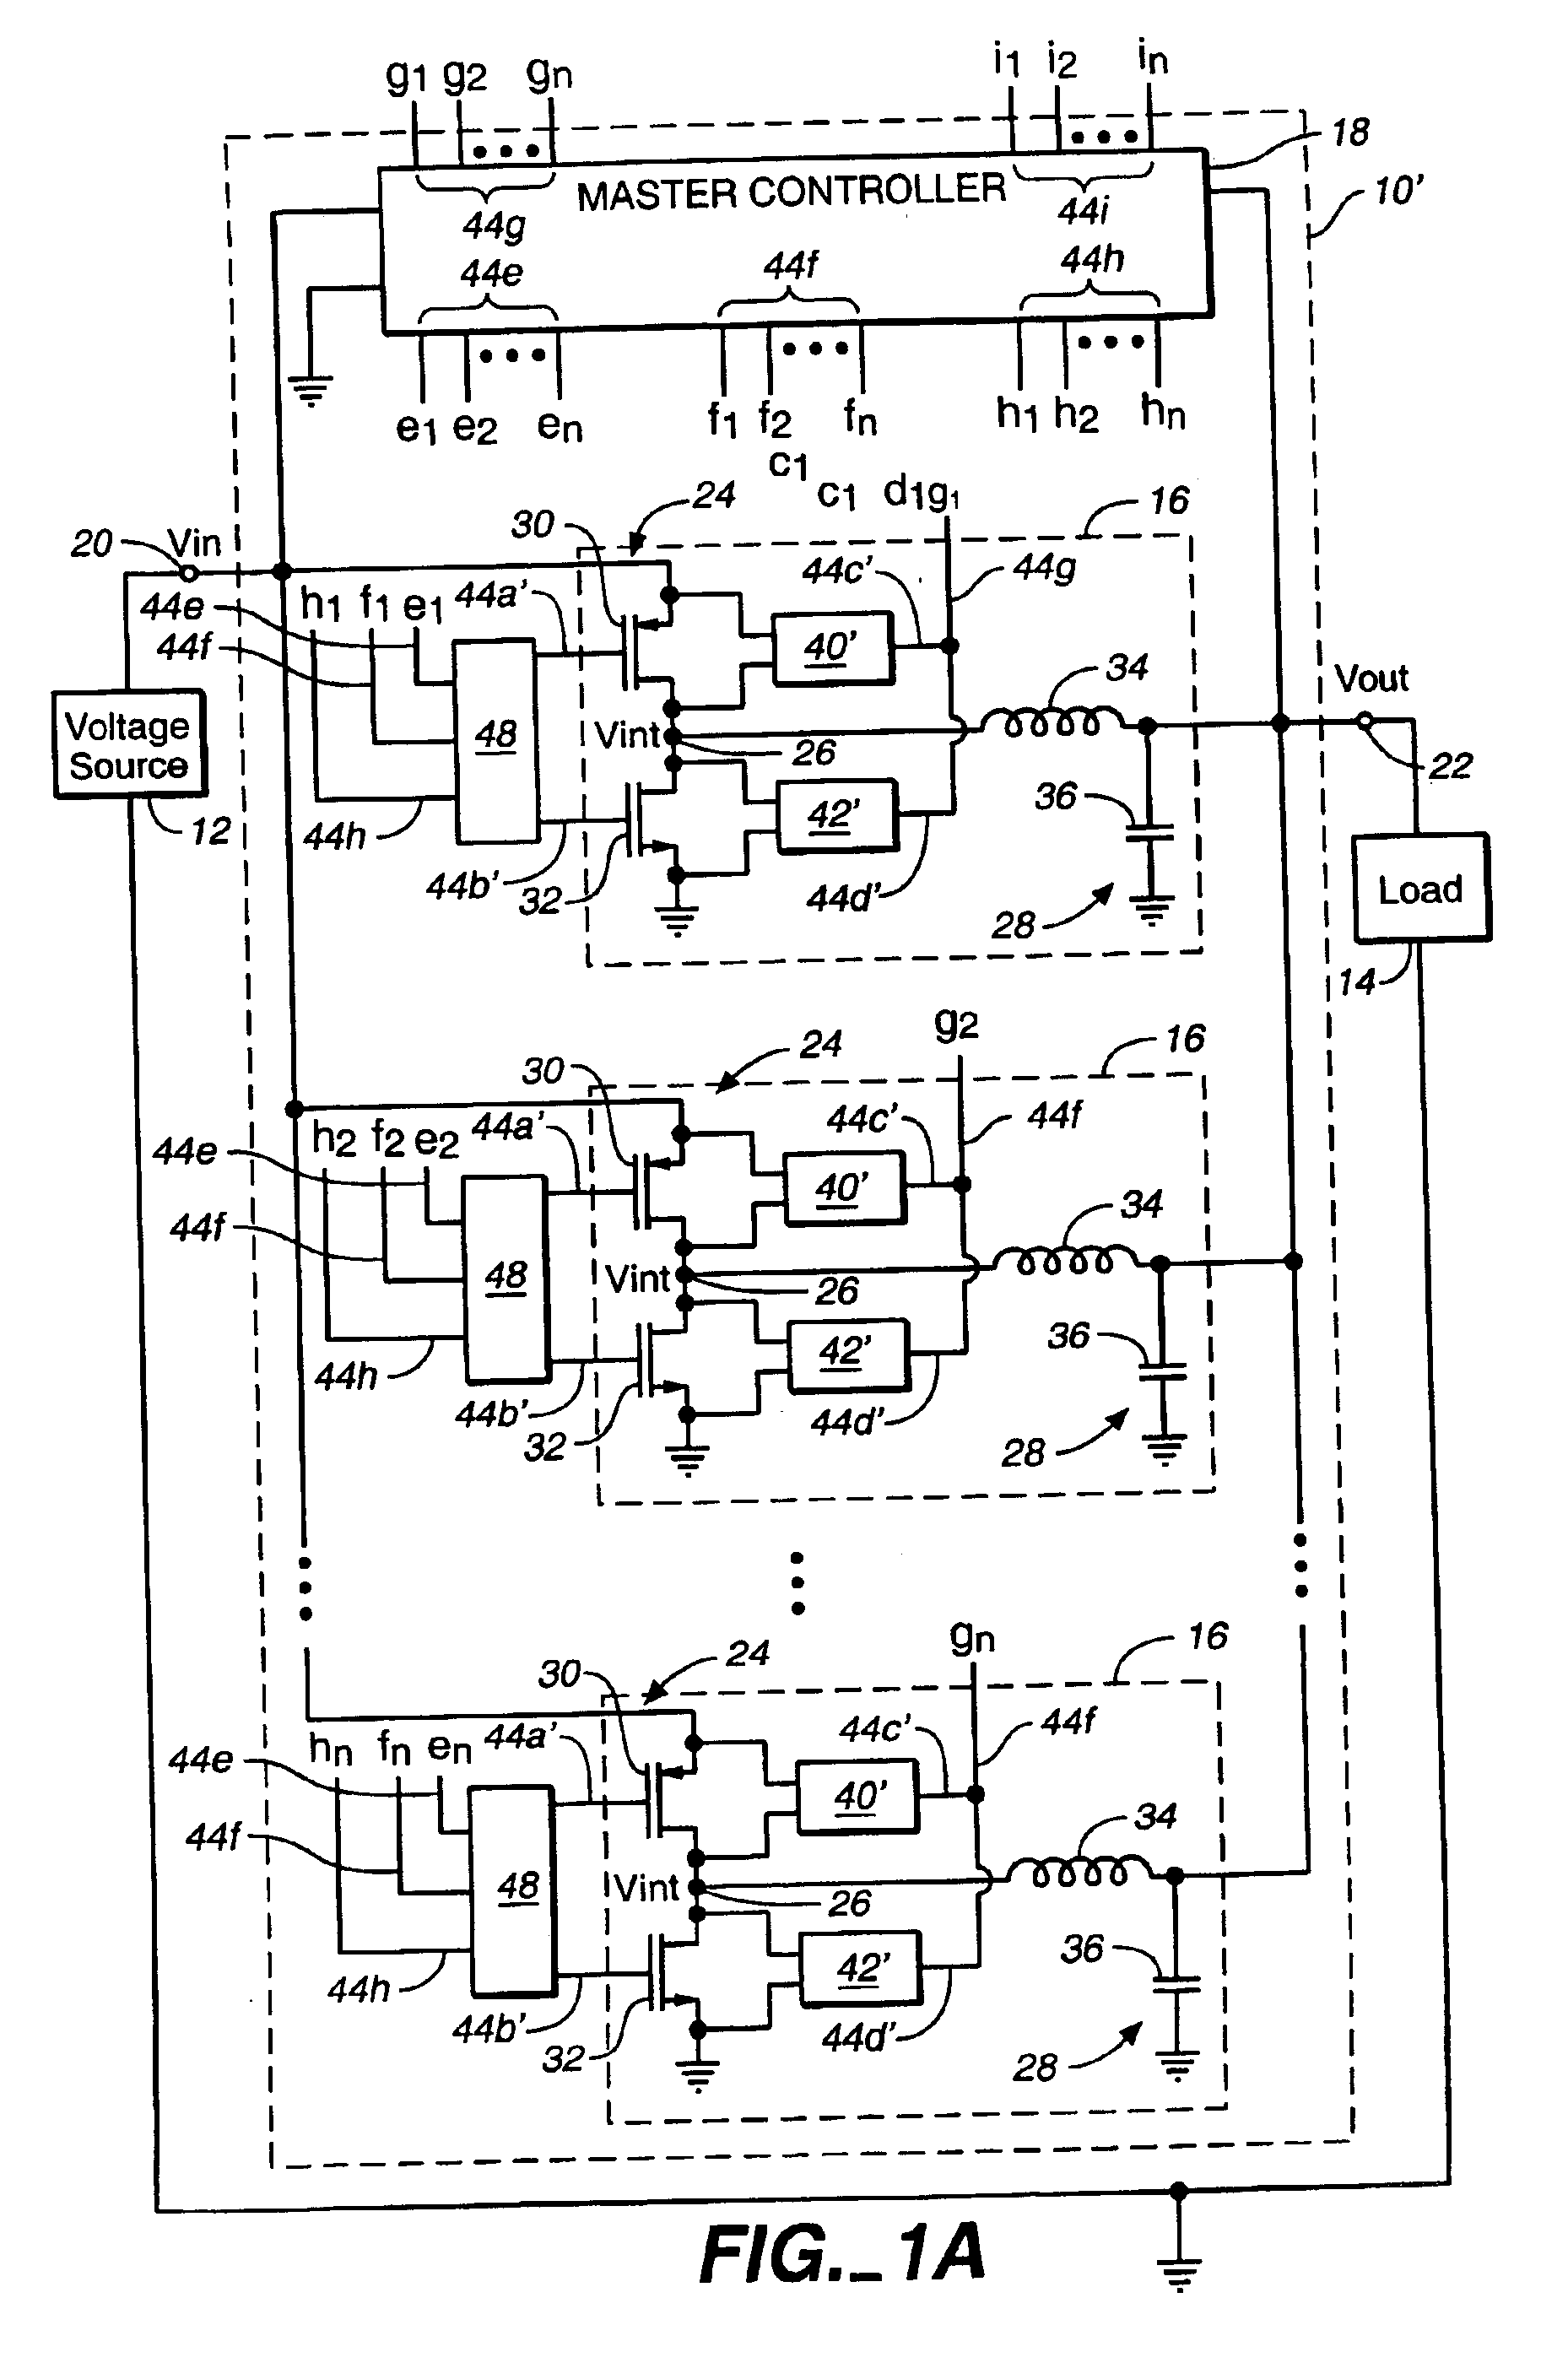 Digital voltage regulator using current control